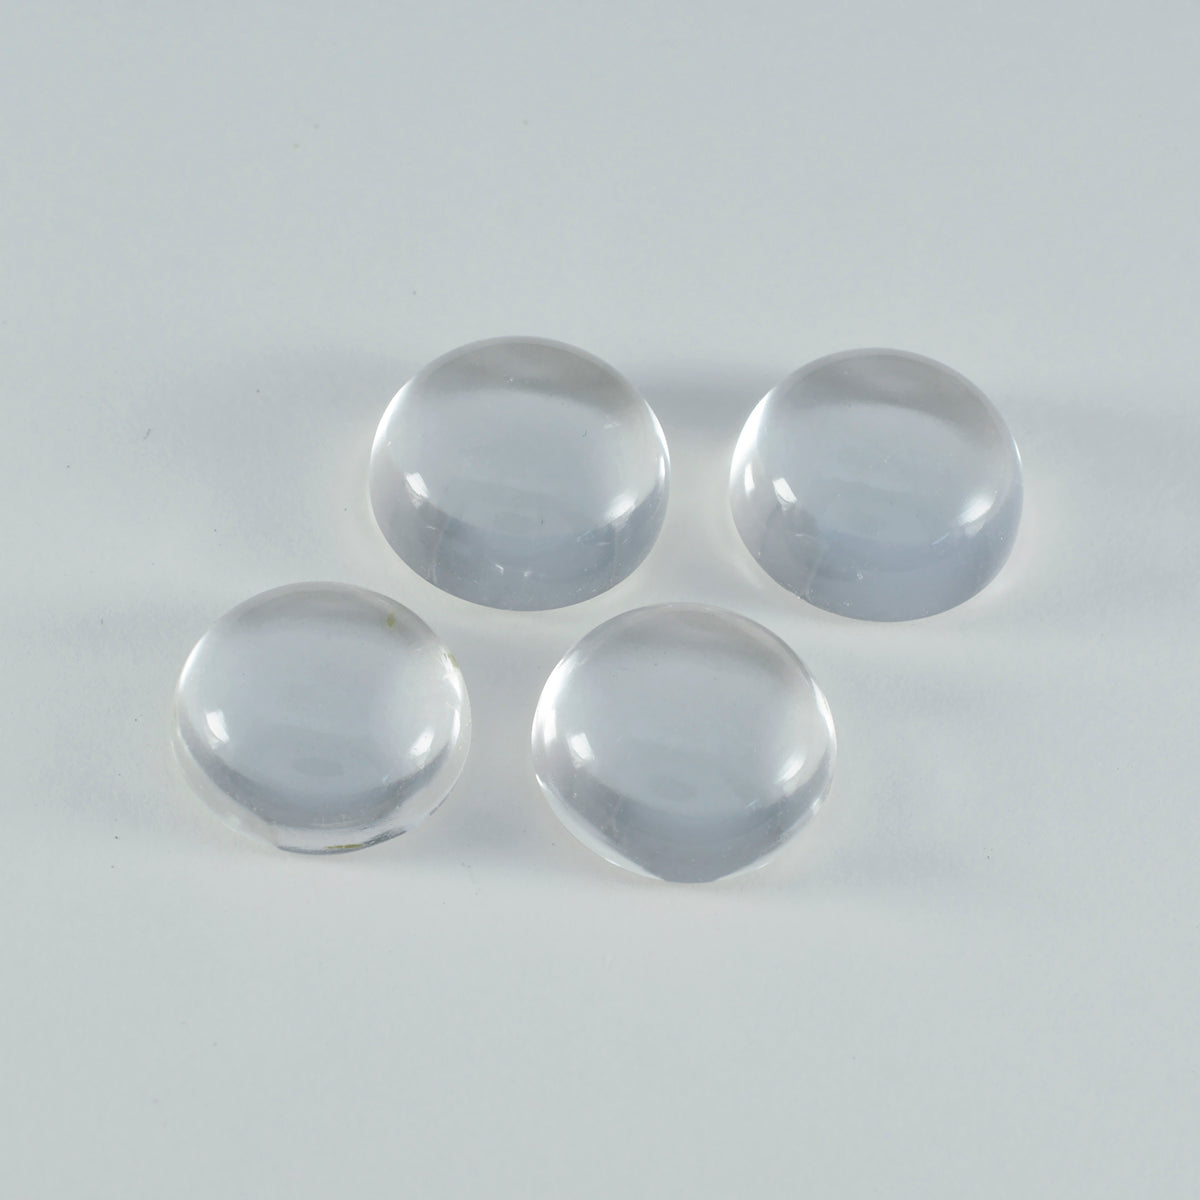 Riyogems 1PC White Crystal Quartz Cabochon 14x14 mm Round Shape handsome Quality Loose Gemstone